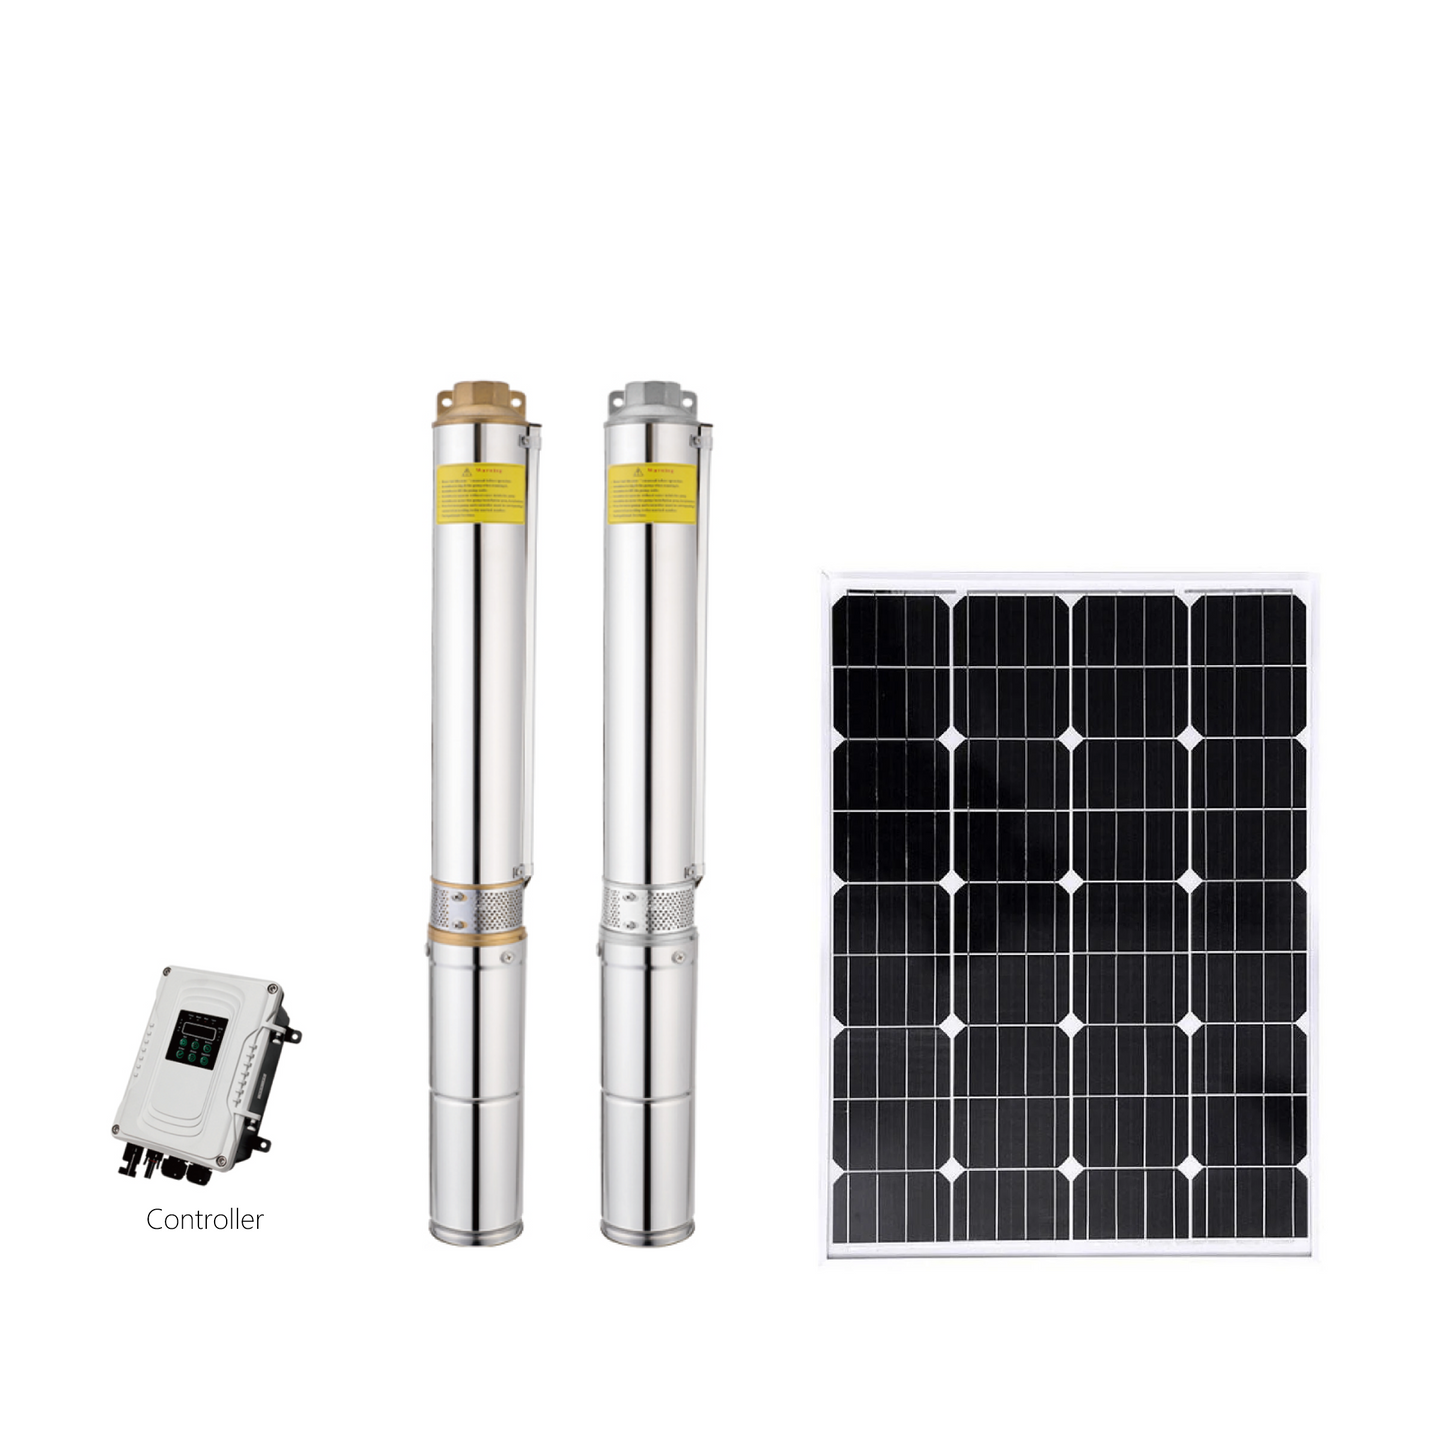 DC SOLAR POWER PUMP-solar panel suggestion